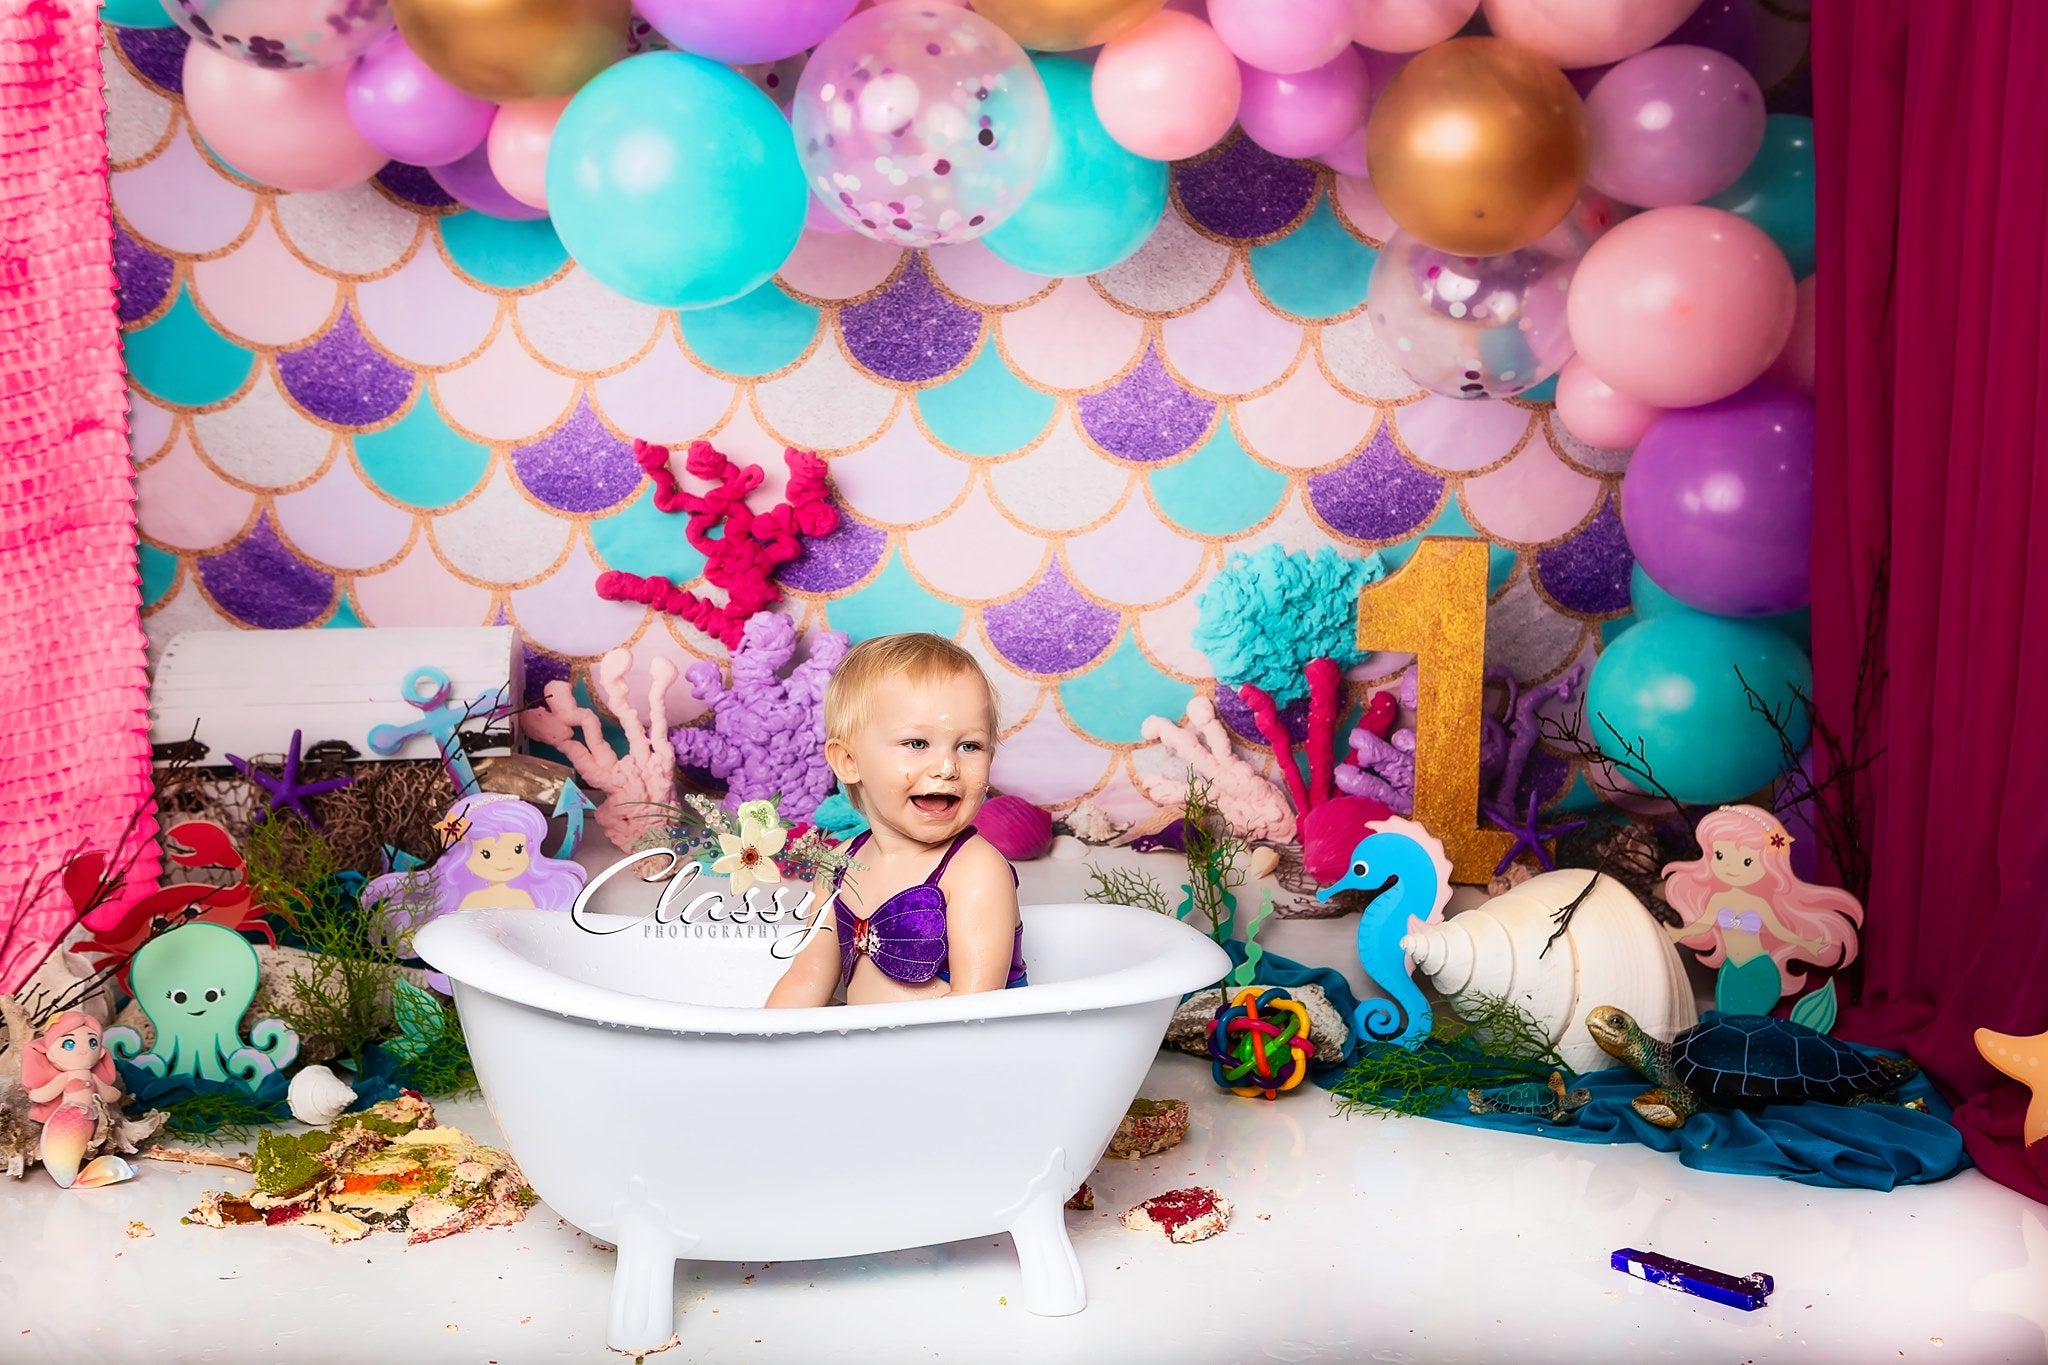 Kate Mermaid 1's Birthday Balloons Backdrop Designed by Jenna Onyia